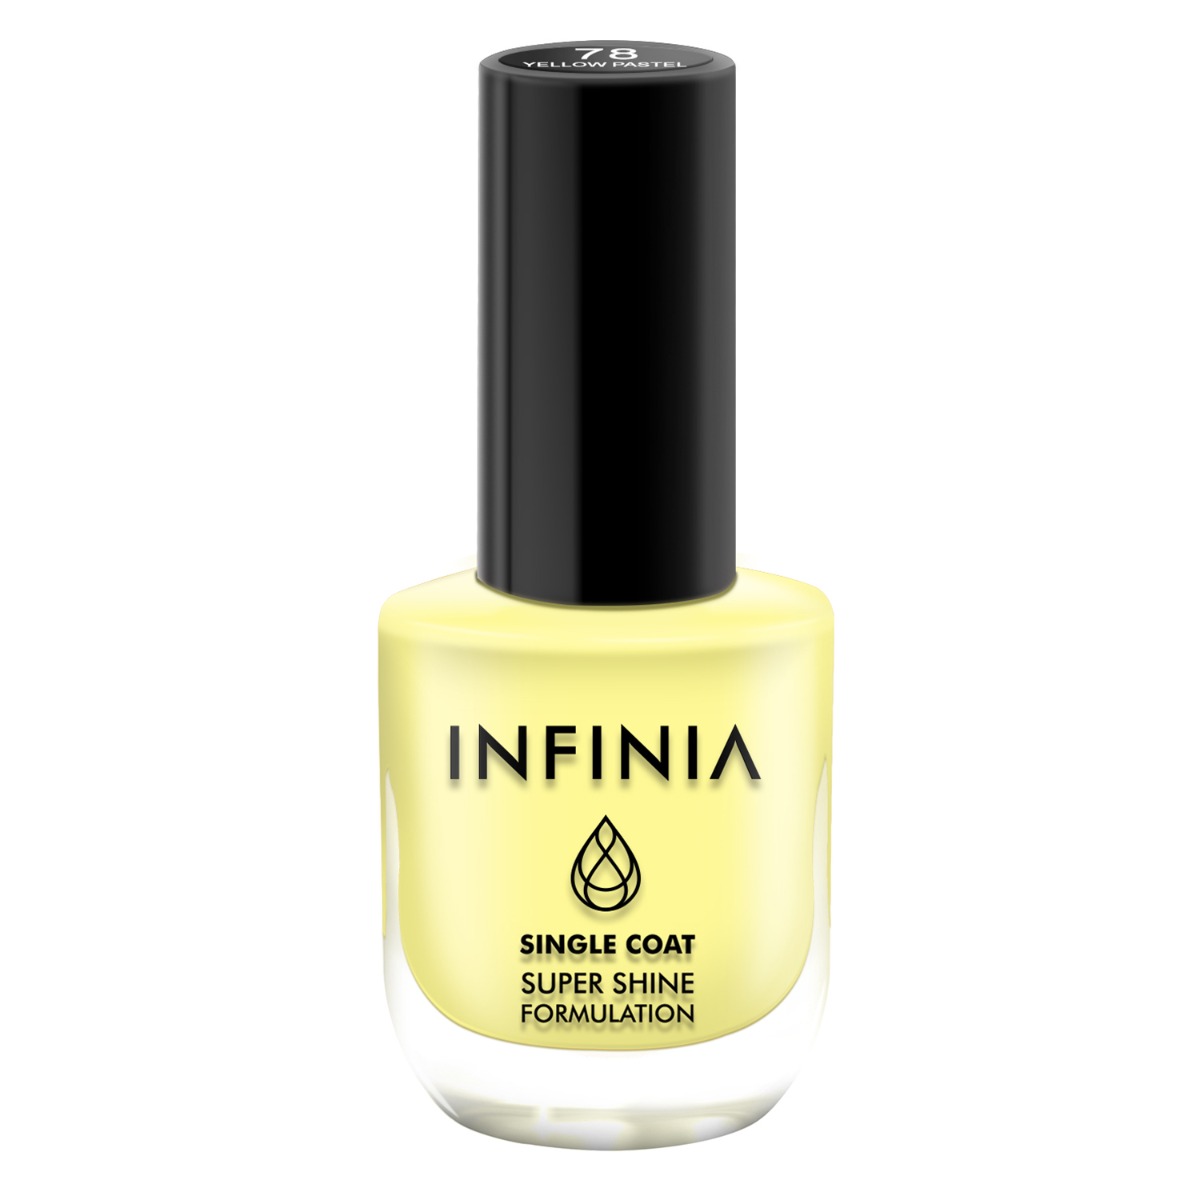 INFINIA Single Coat Super Shine Nail Polish With Ultra High Gloss, 12ml-078 Yellow Pastel